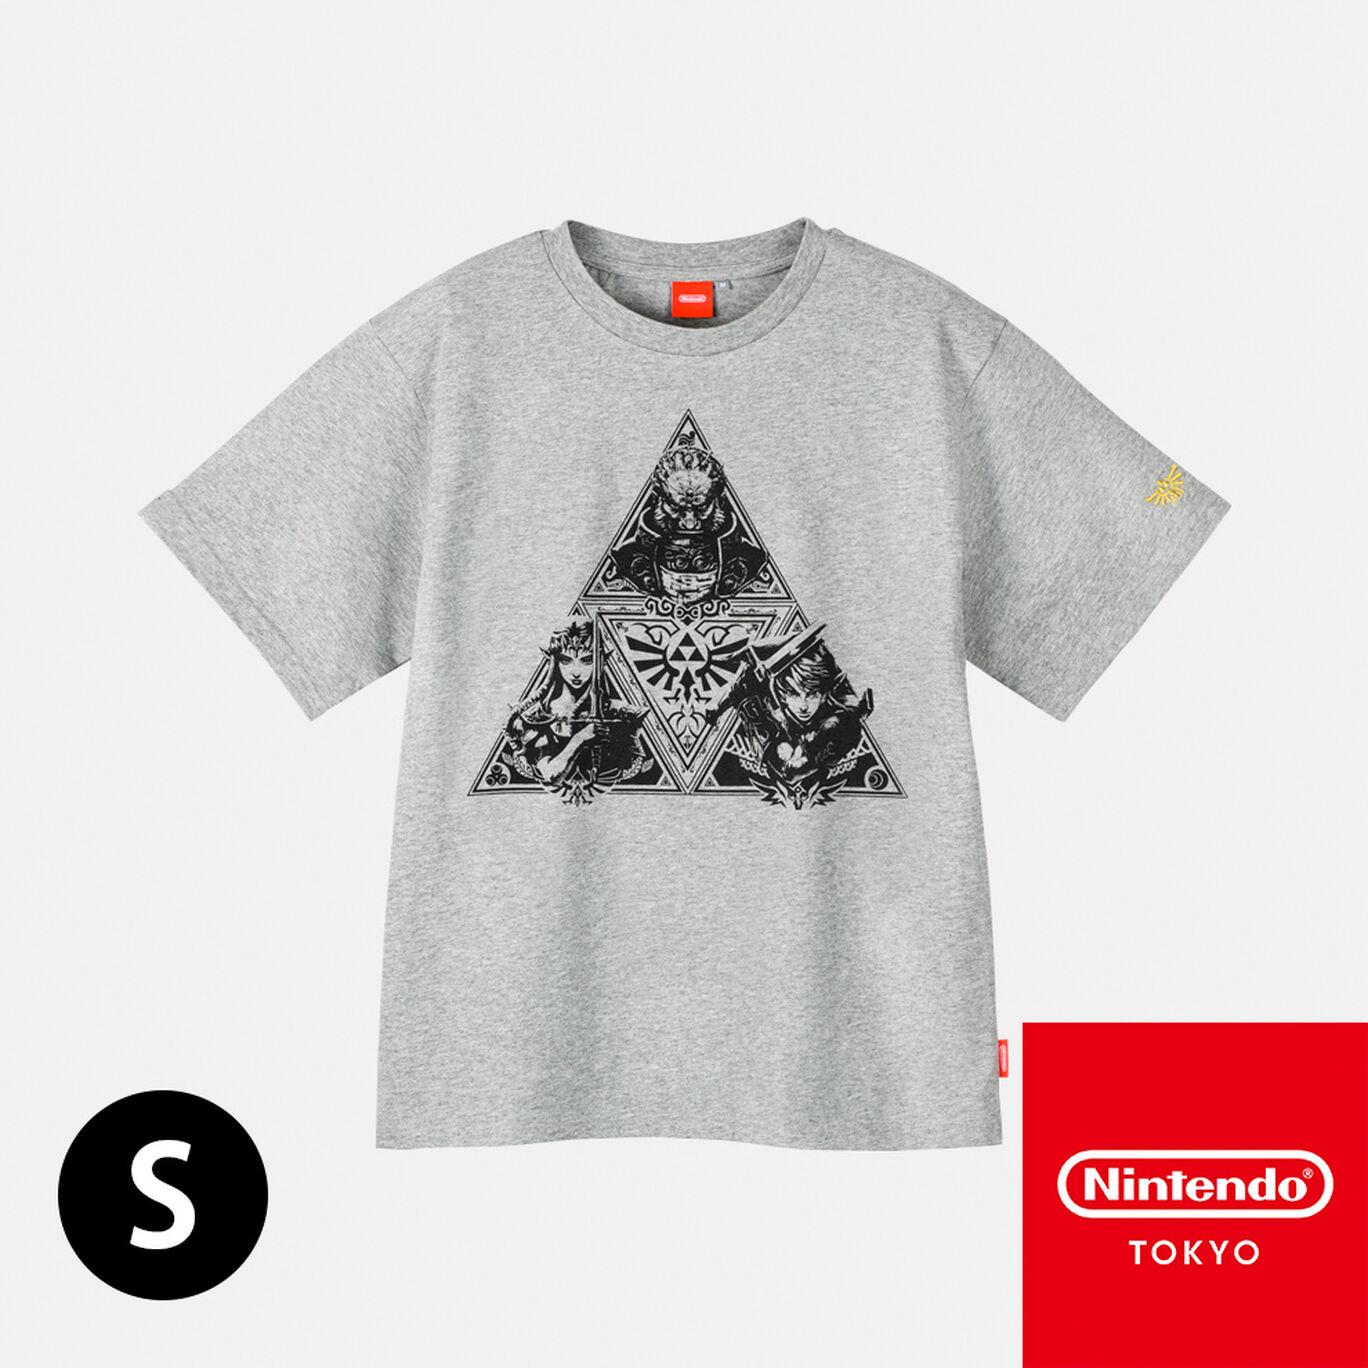 Tシャツ トライフォース S ゼルダの伝説【Nintendo TOKYO/OSAKA取り扱い商品】